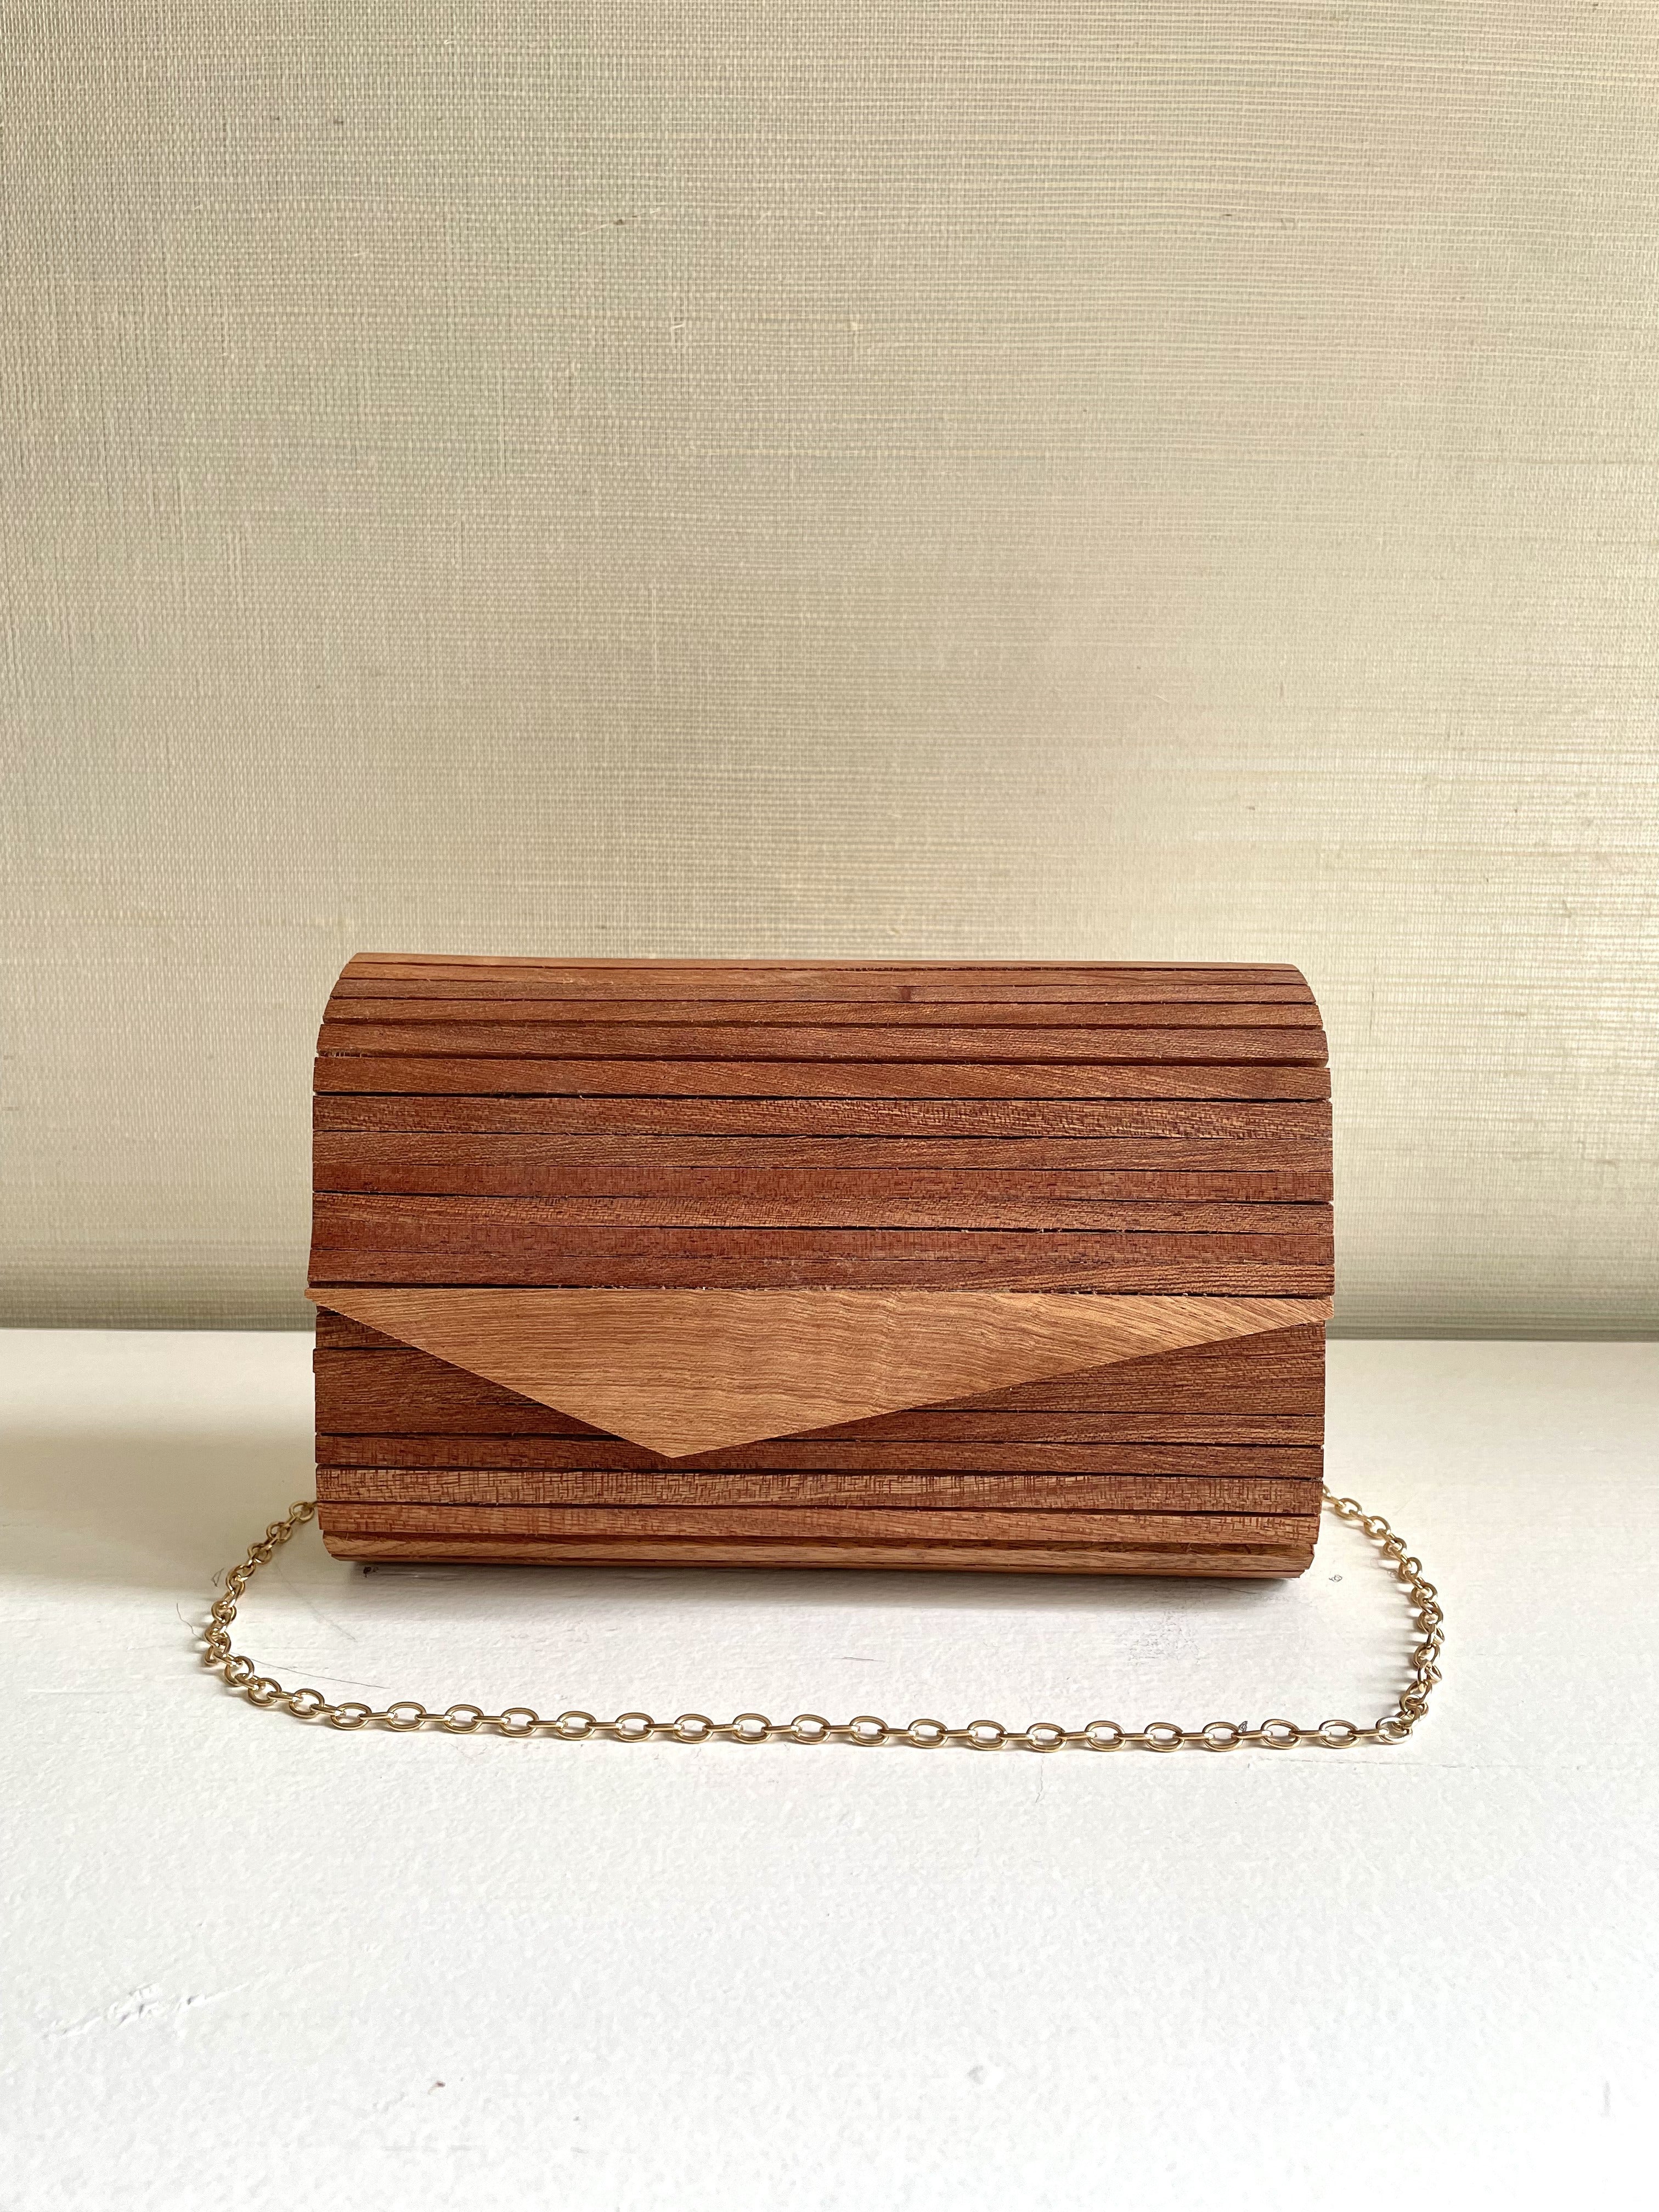 Scallop ( Brown ) luxury wooden hand bag for women - Handmade